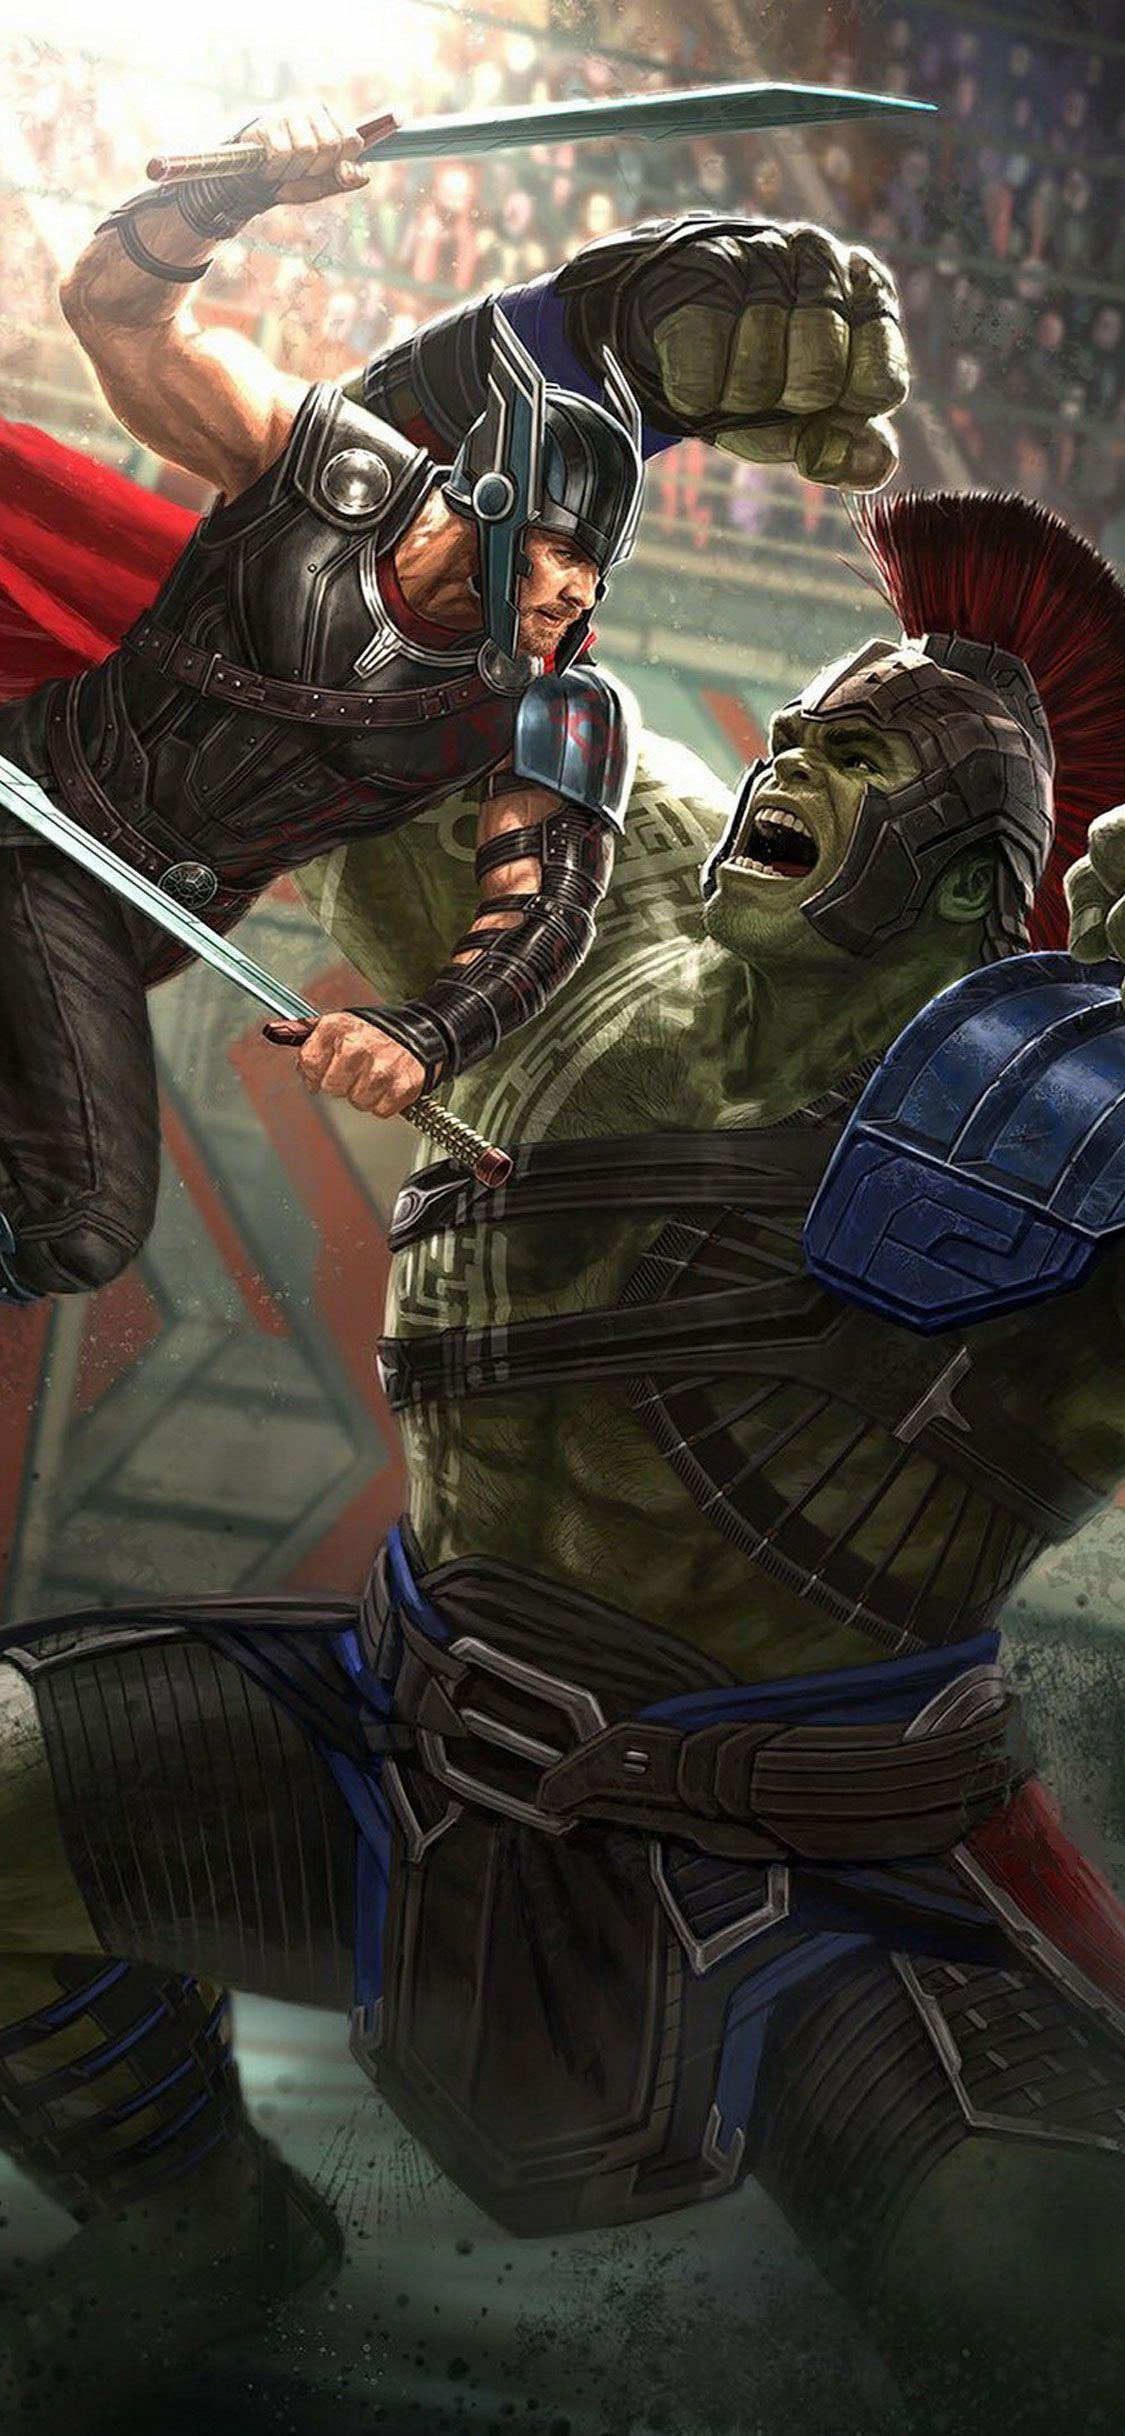 Thor Hulk Fight iPhone X. Anurag. Marvel comics, Marvel, Marvel fan